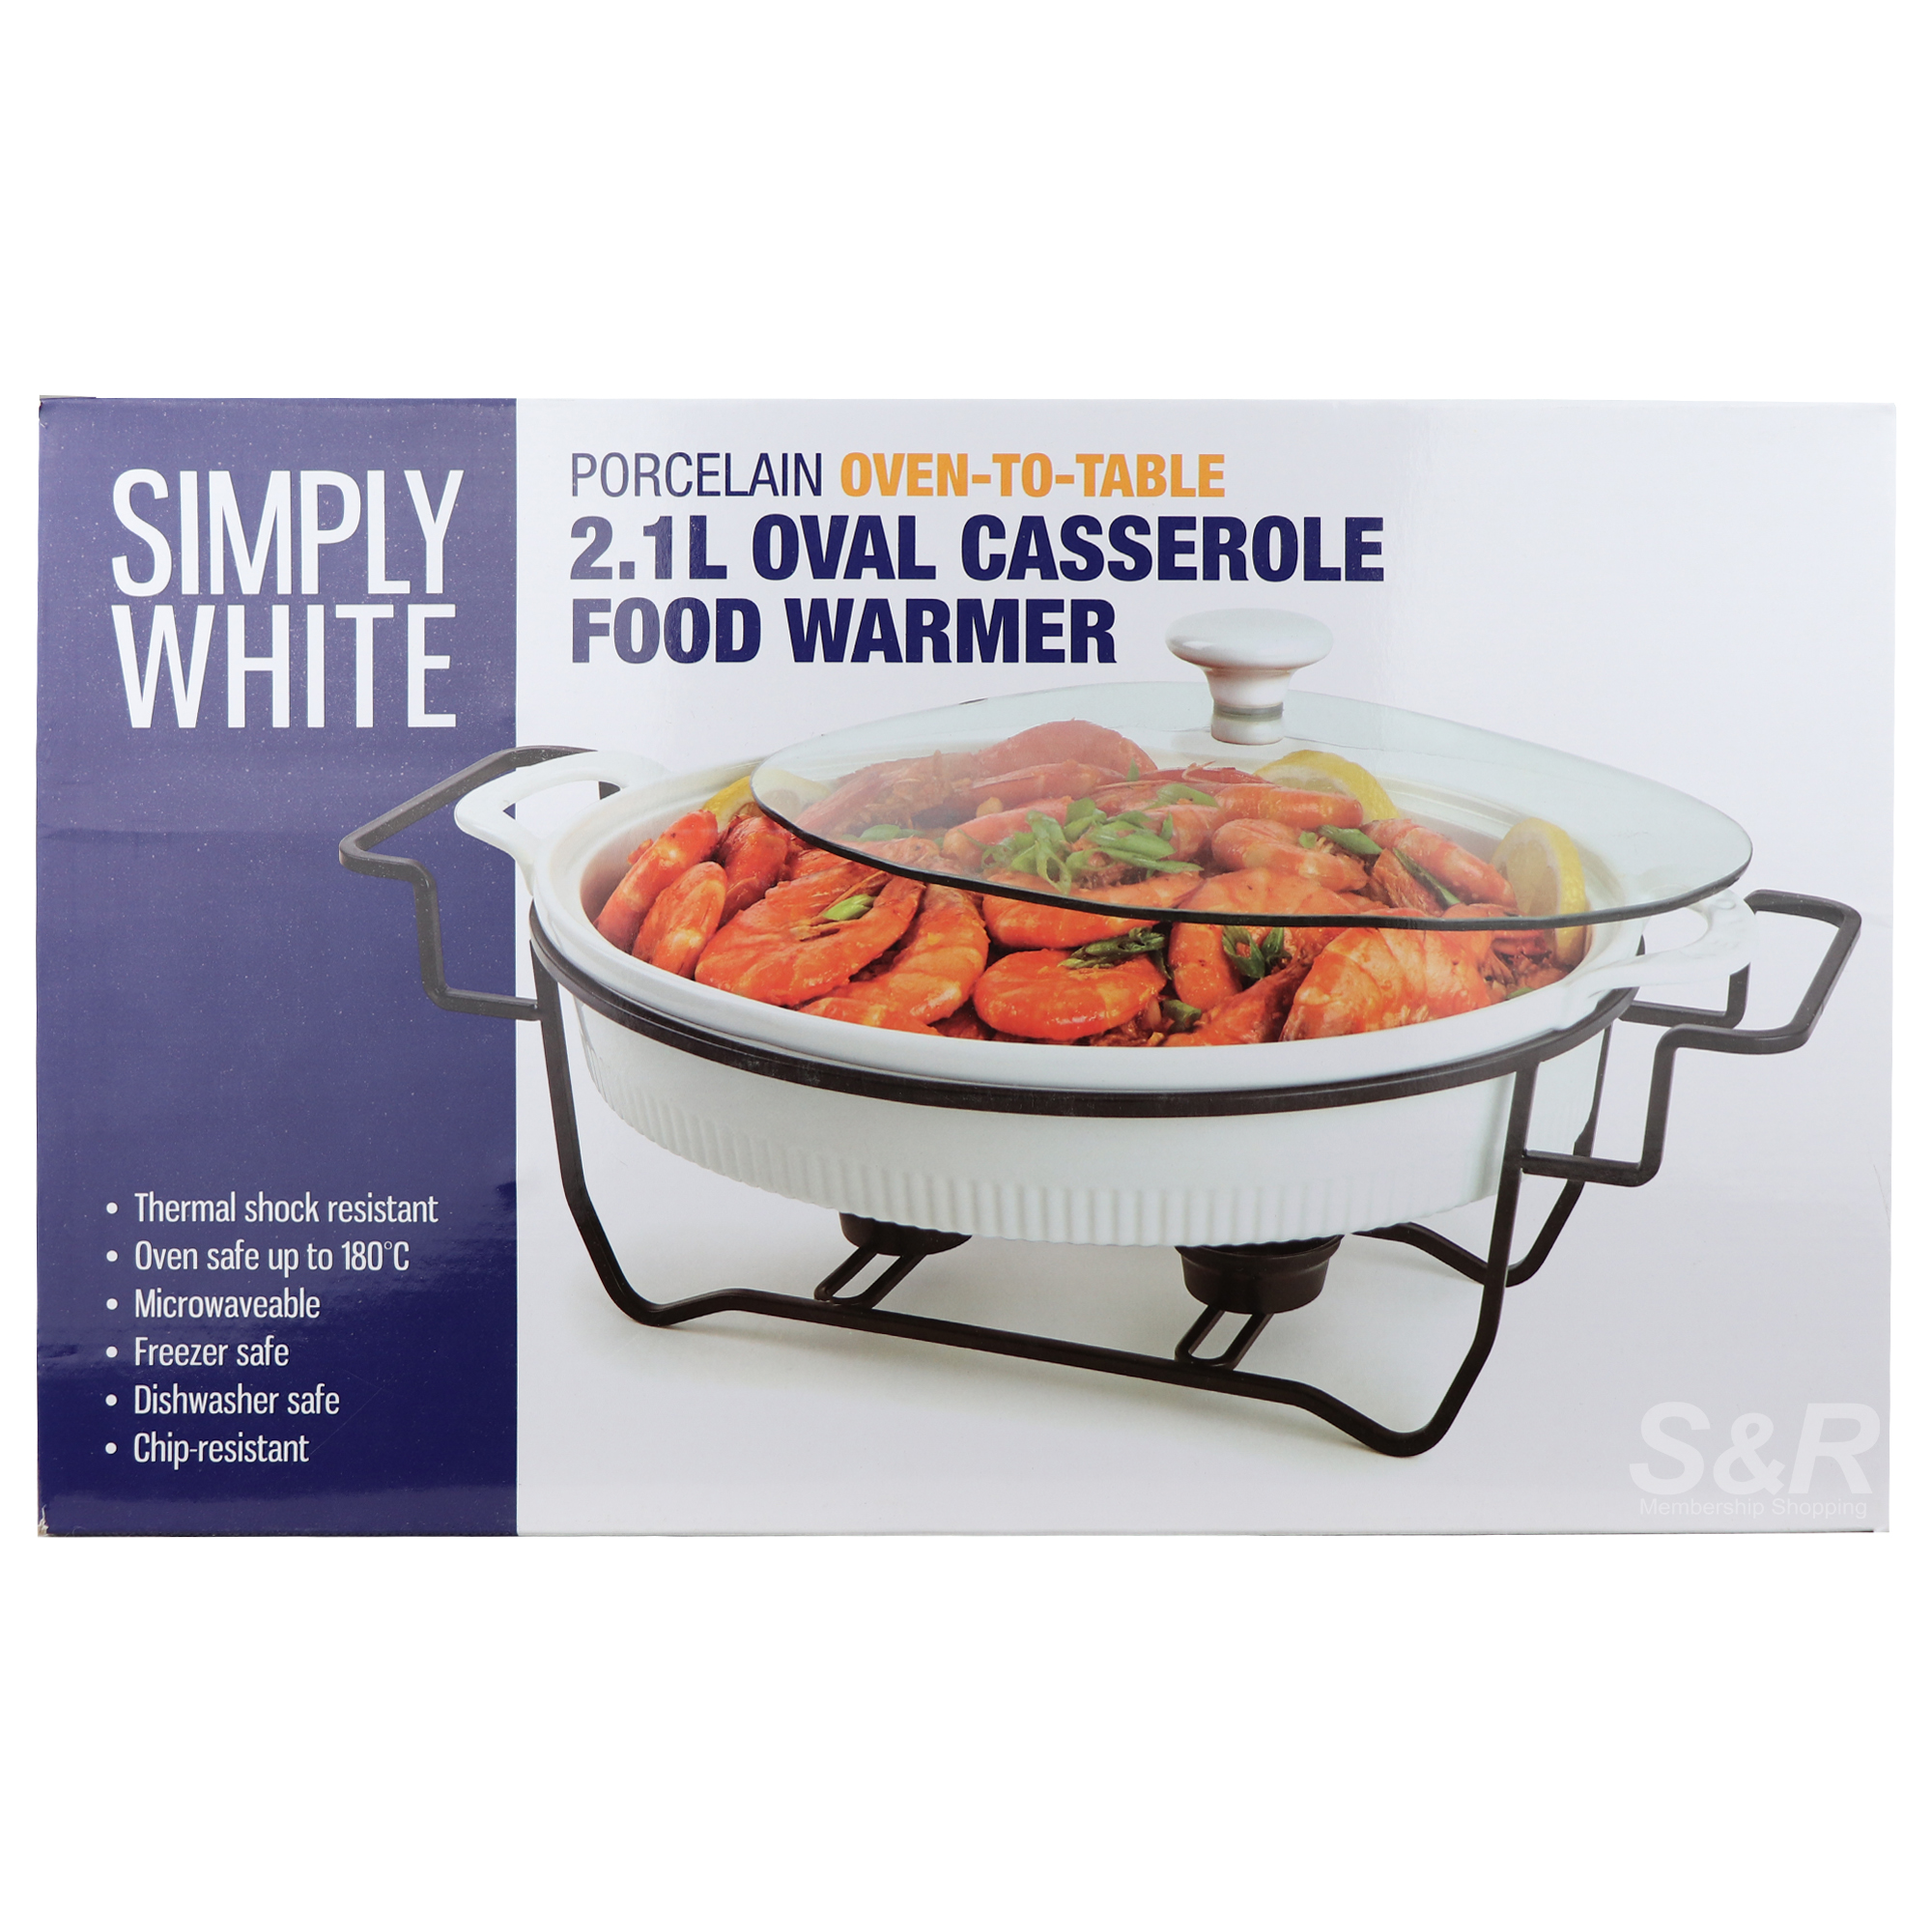 Simply White 2.1L Oval Casserole Food Warmer